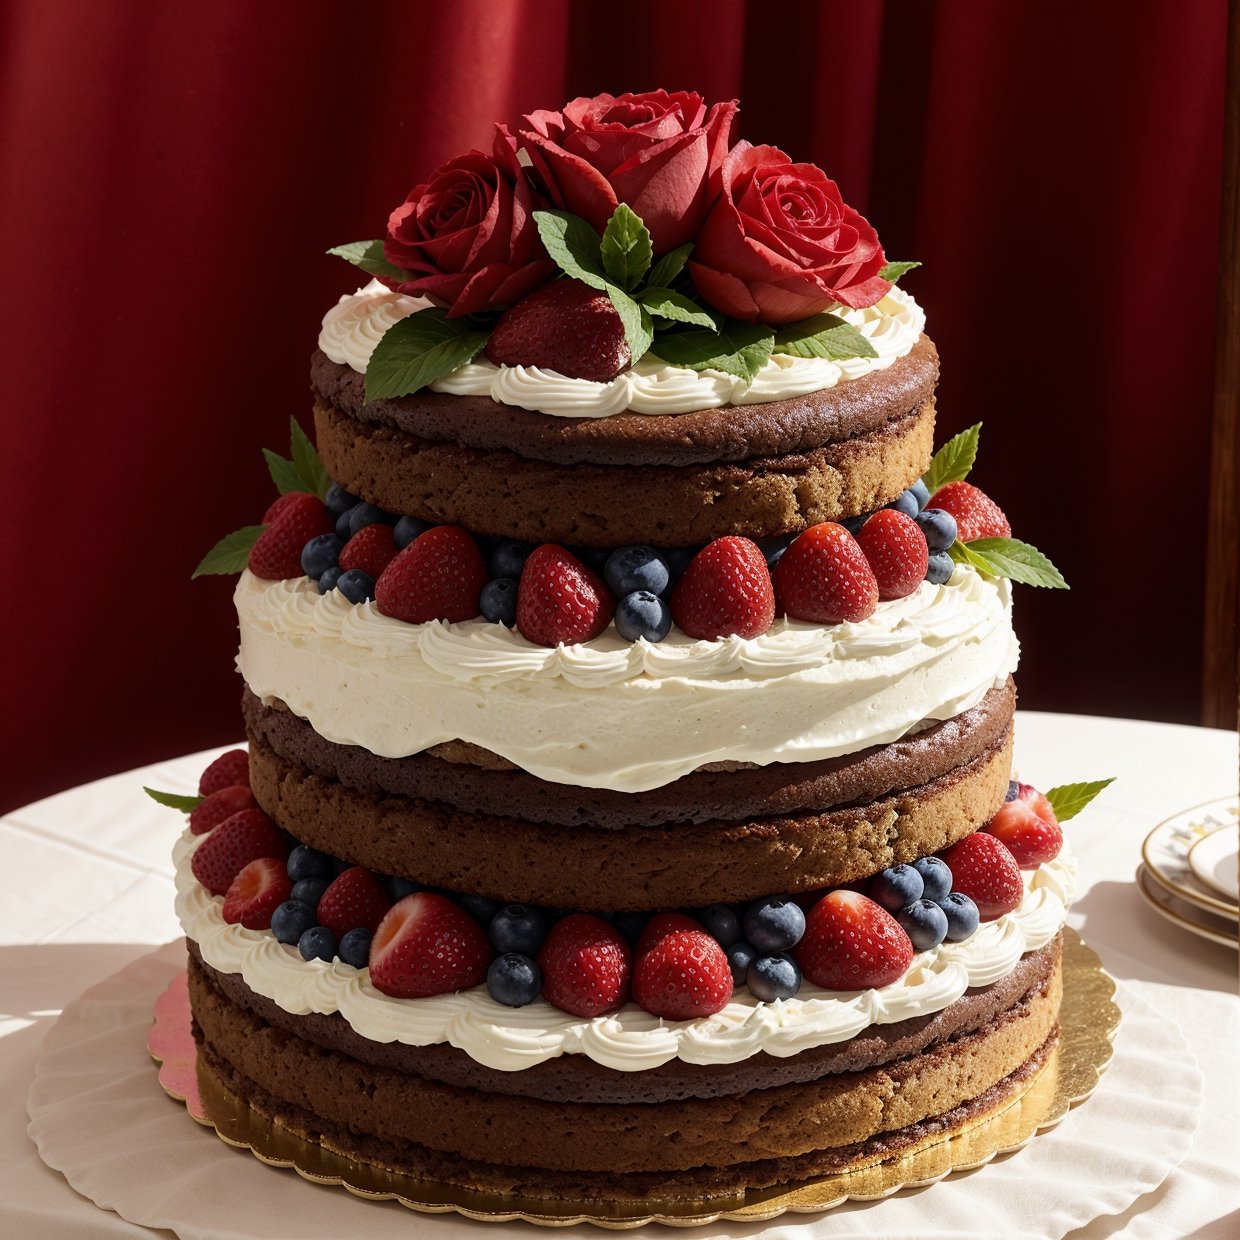 4k, extraordinary multi-layered cake, elegant intricate decoration details,add